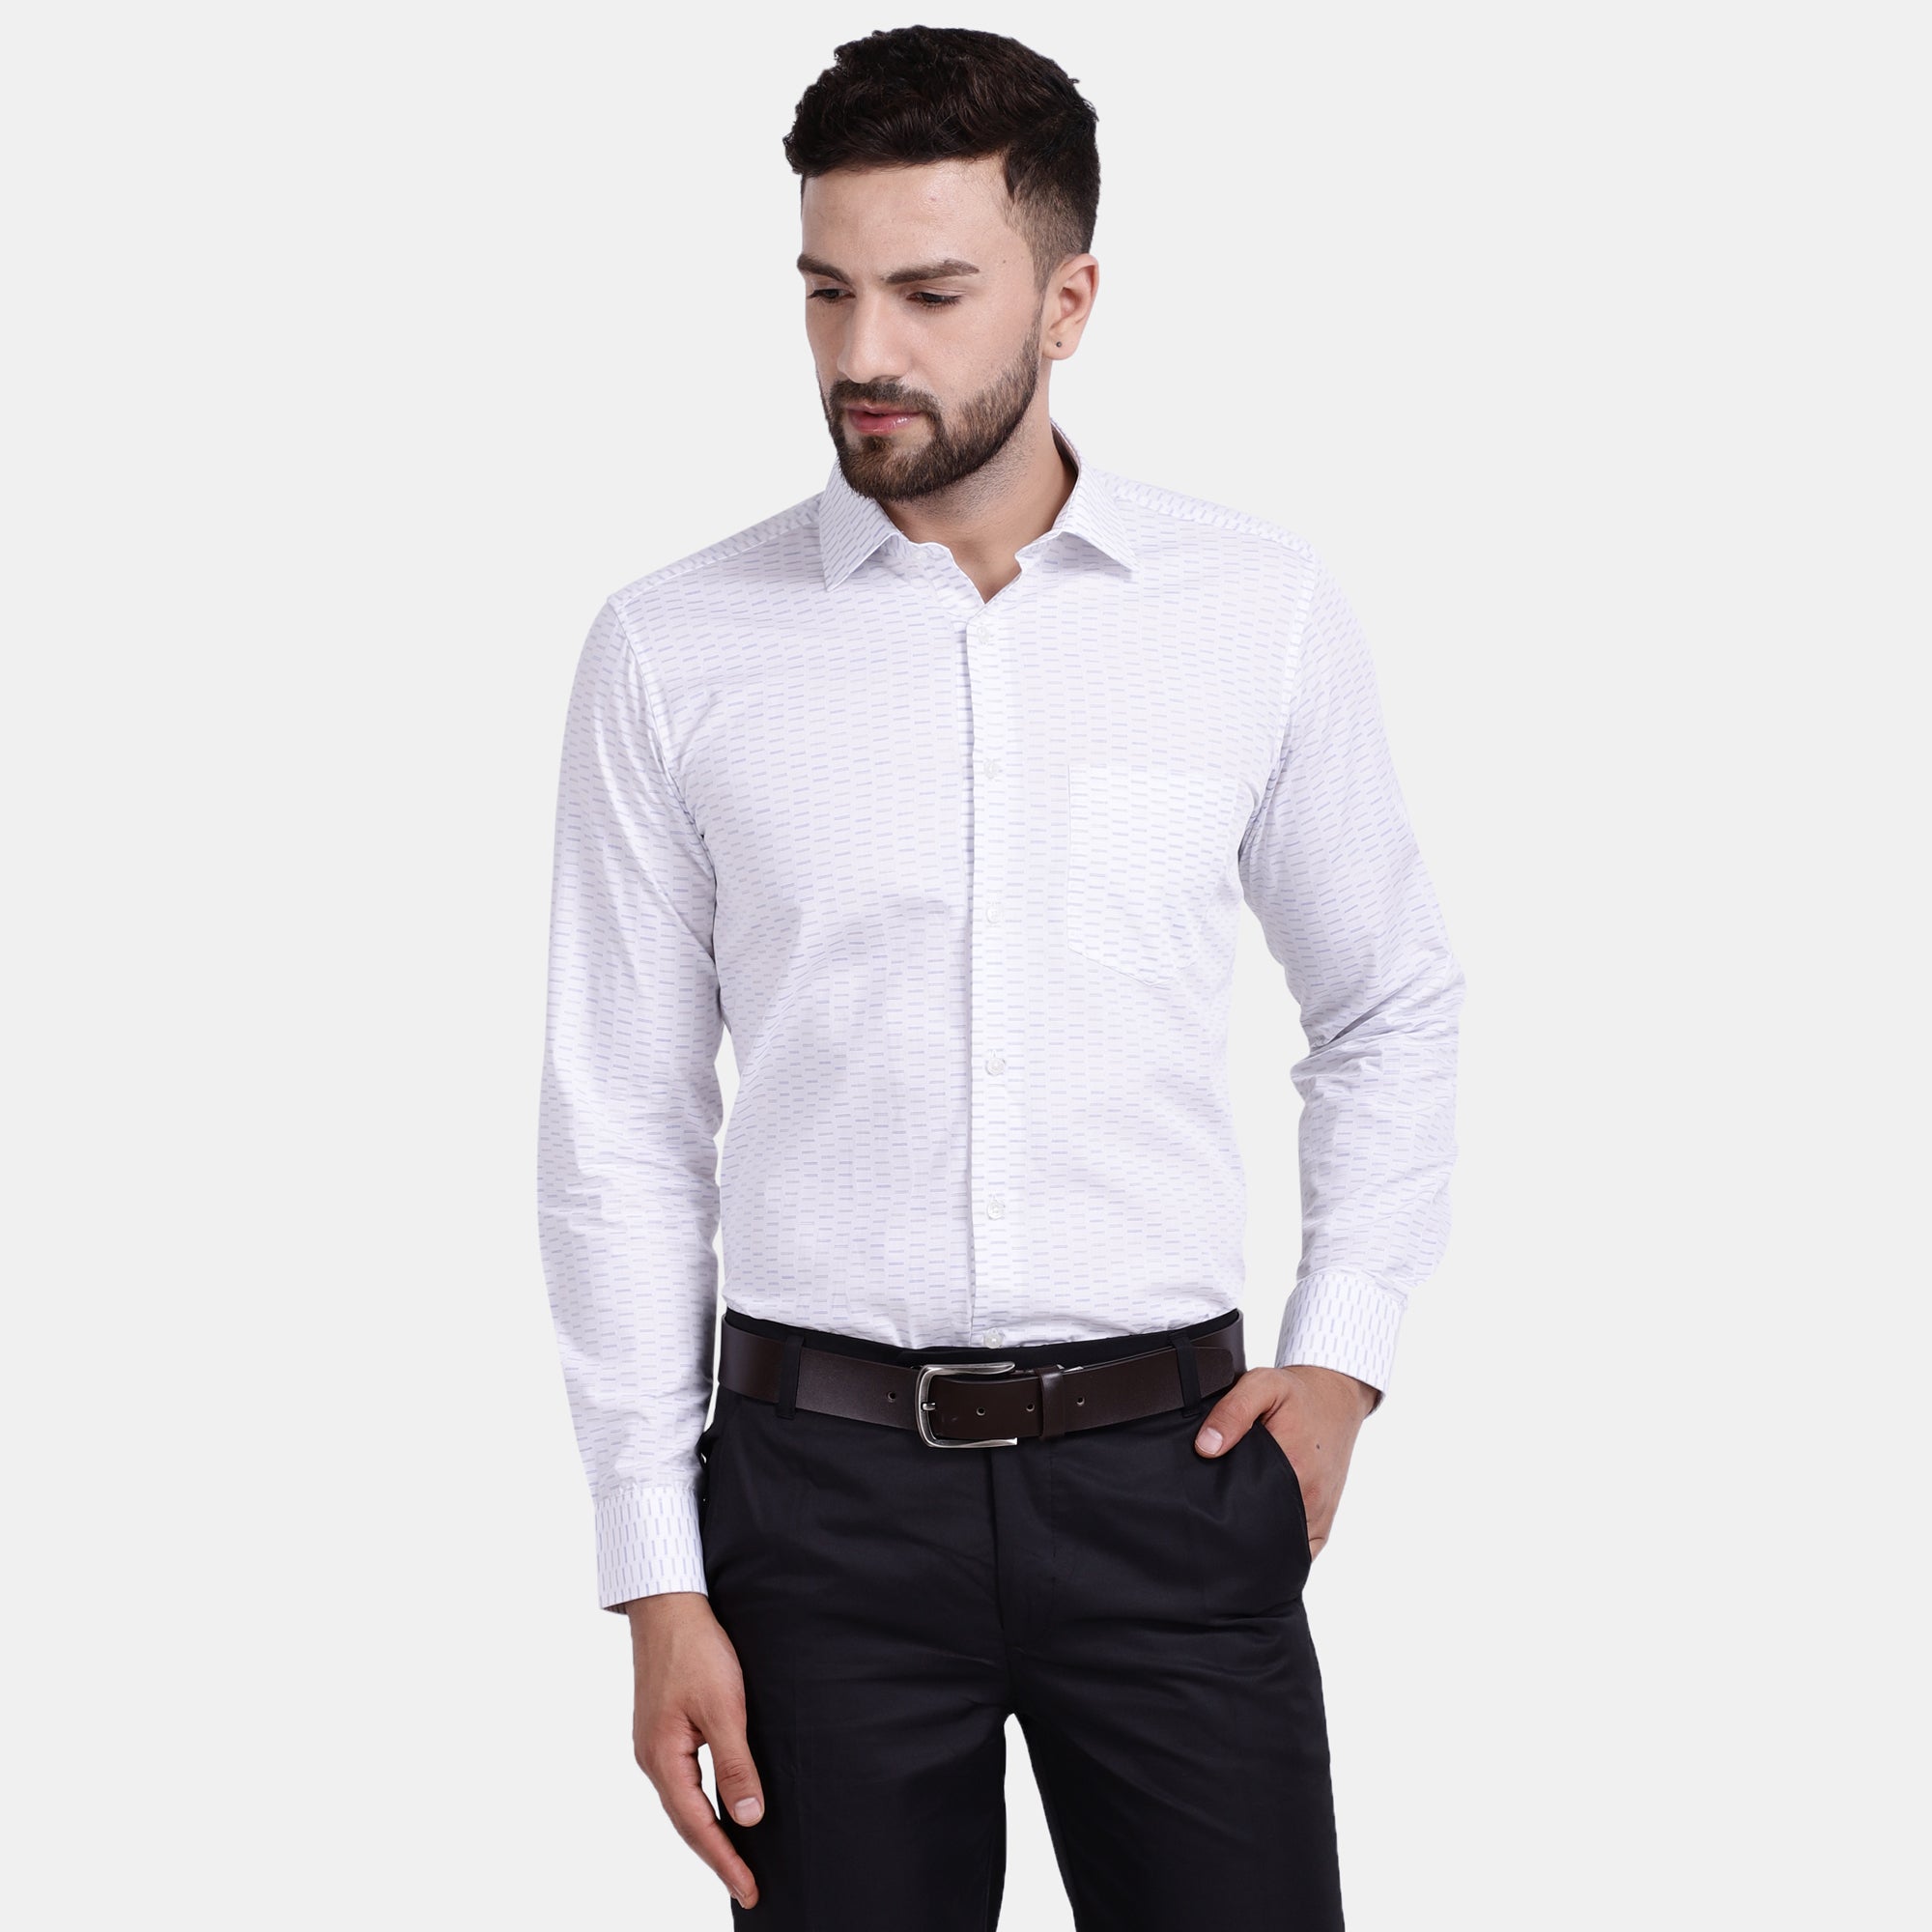 Men's Luthai Supima Mercerised Cotton Small Broken Stripe Jacquard Design Regular Fit Dress Shirt